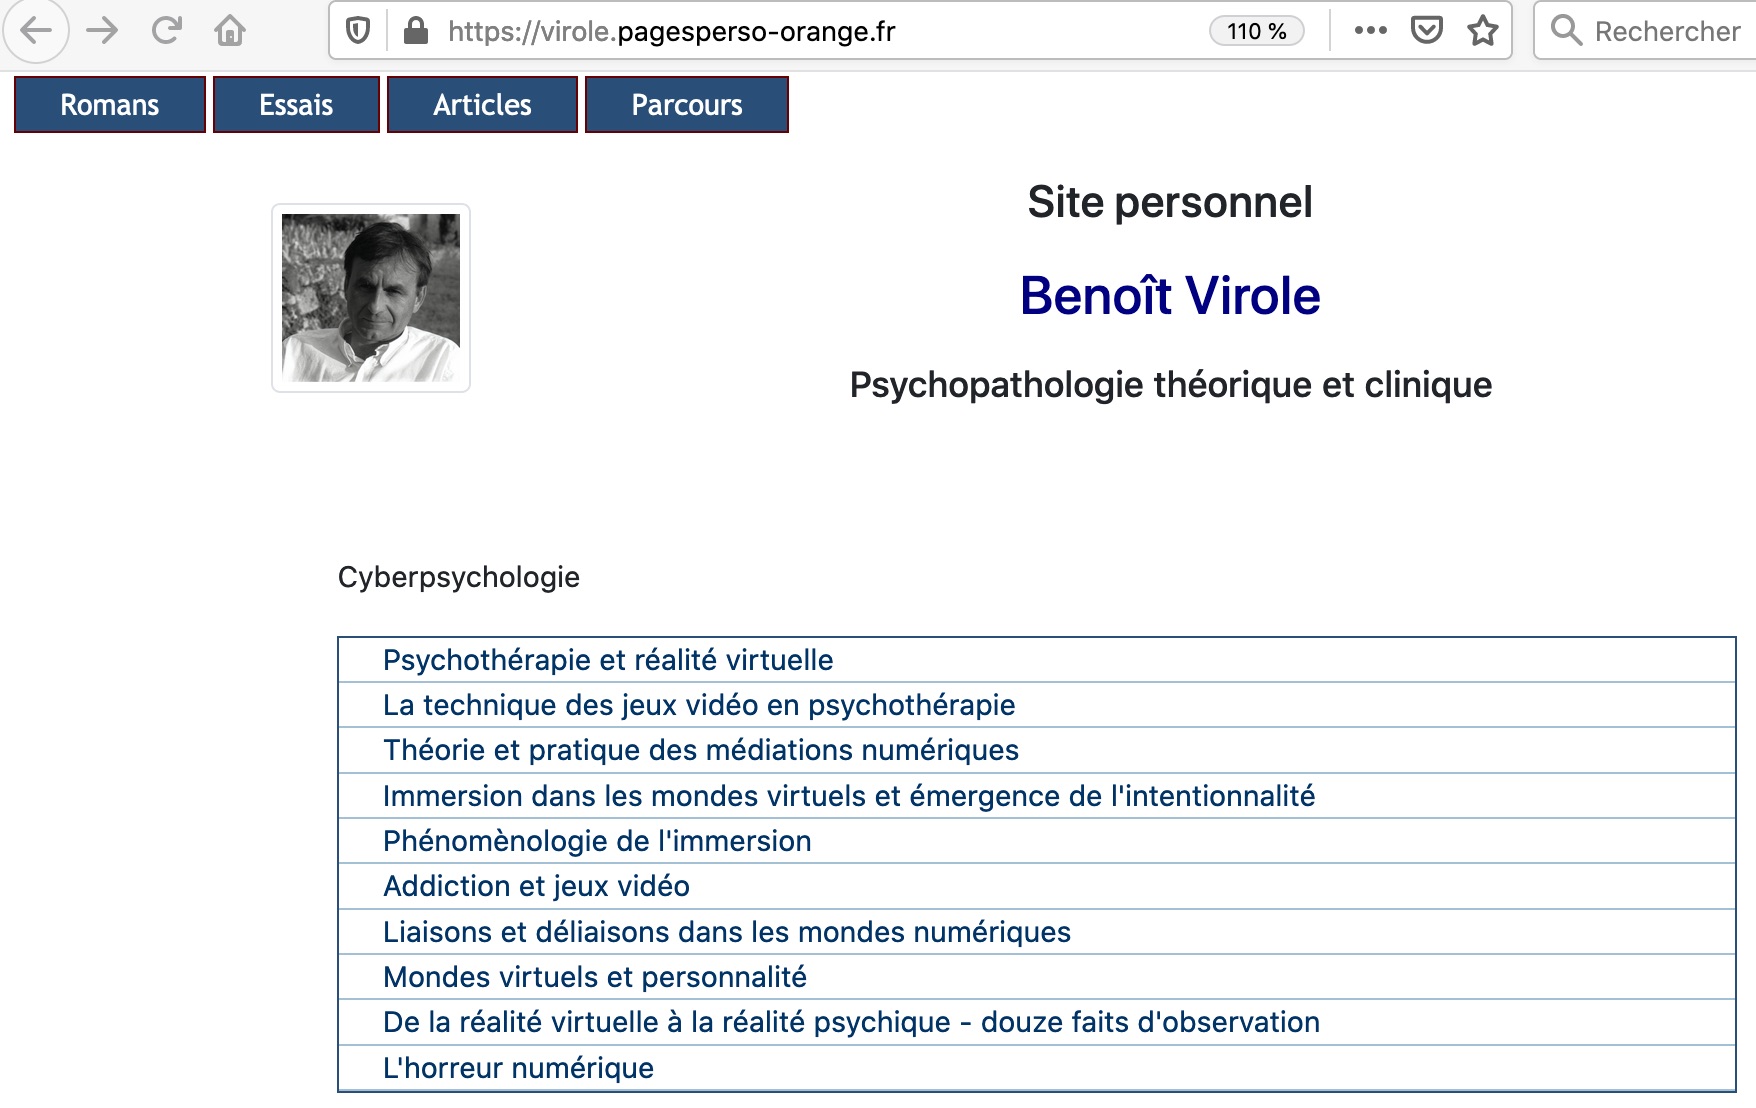 Benoît Virole – Cyberpsychologie